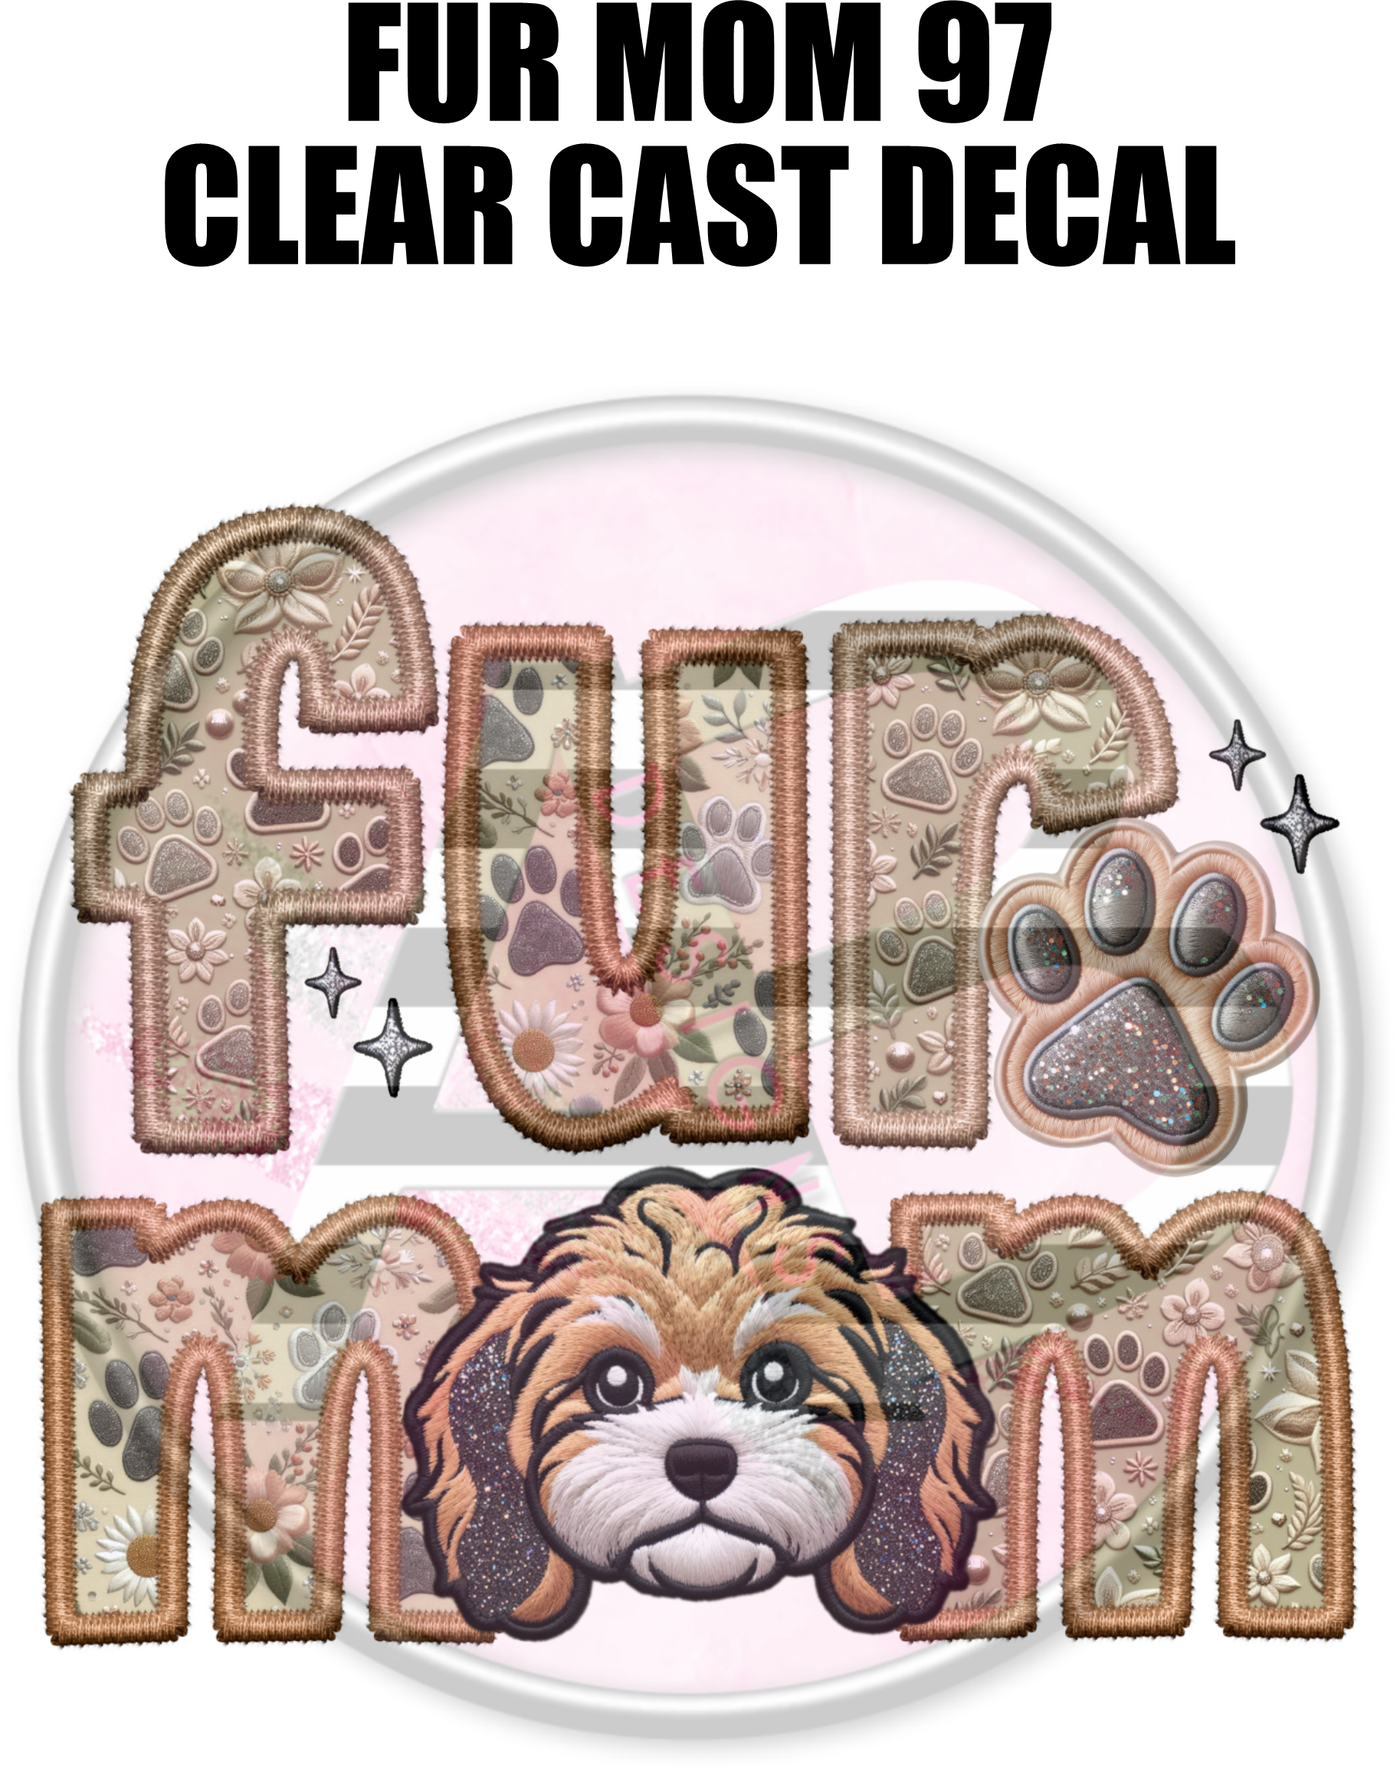 Fur Mom 97 - Clear Cast Decal